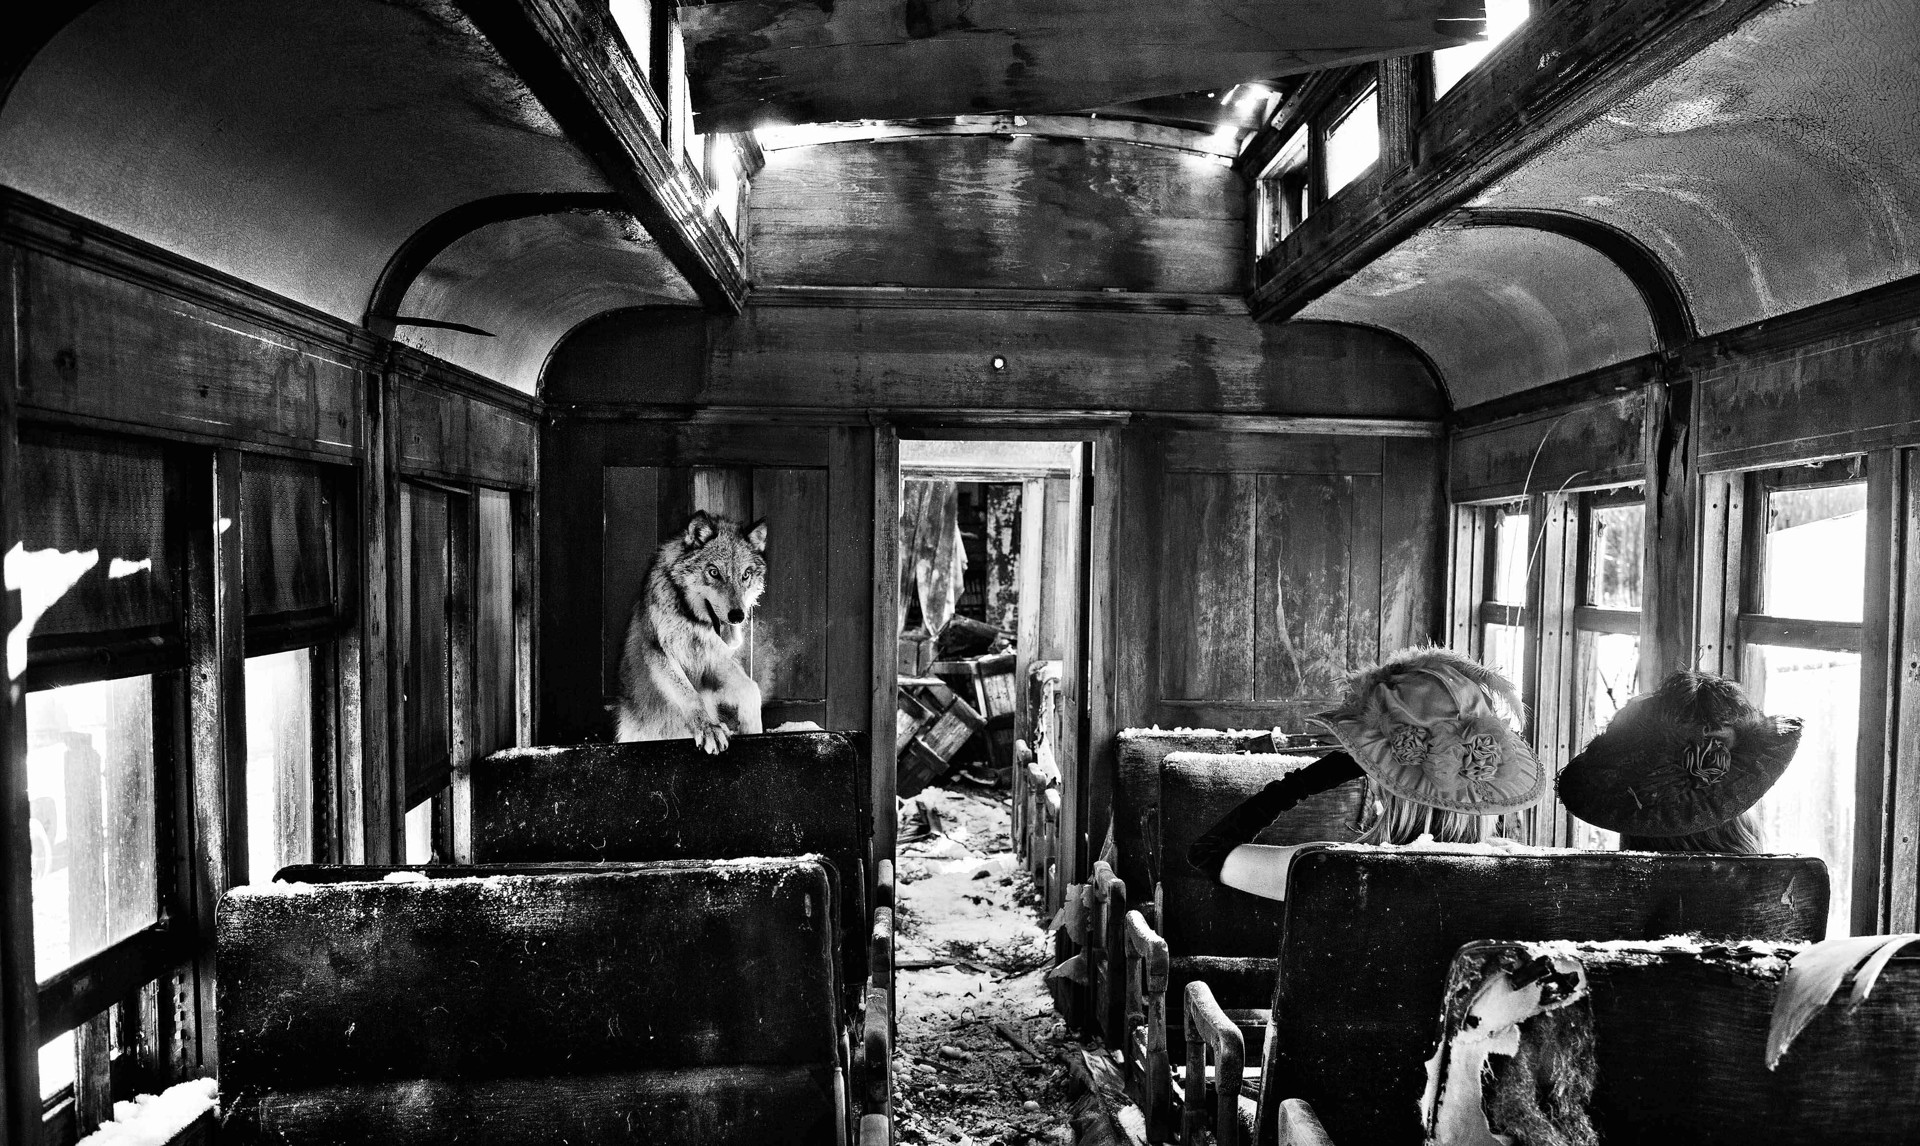 Ride the Ghost Train by David Yarrow